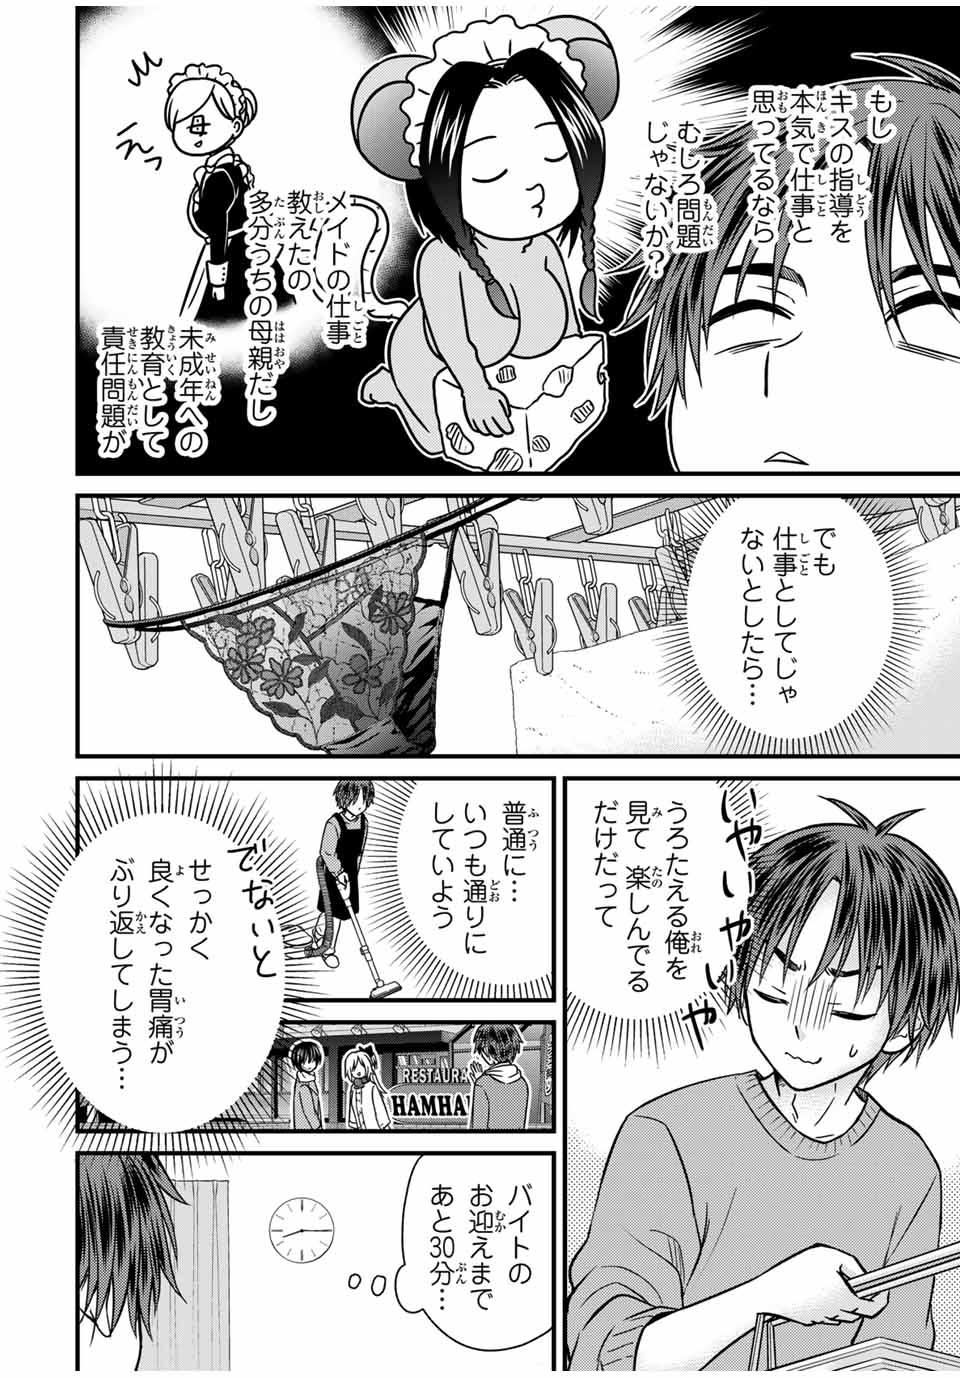 Ojousama no Shimobe - Chapter 129 - Page 6